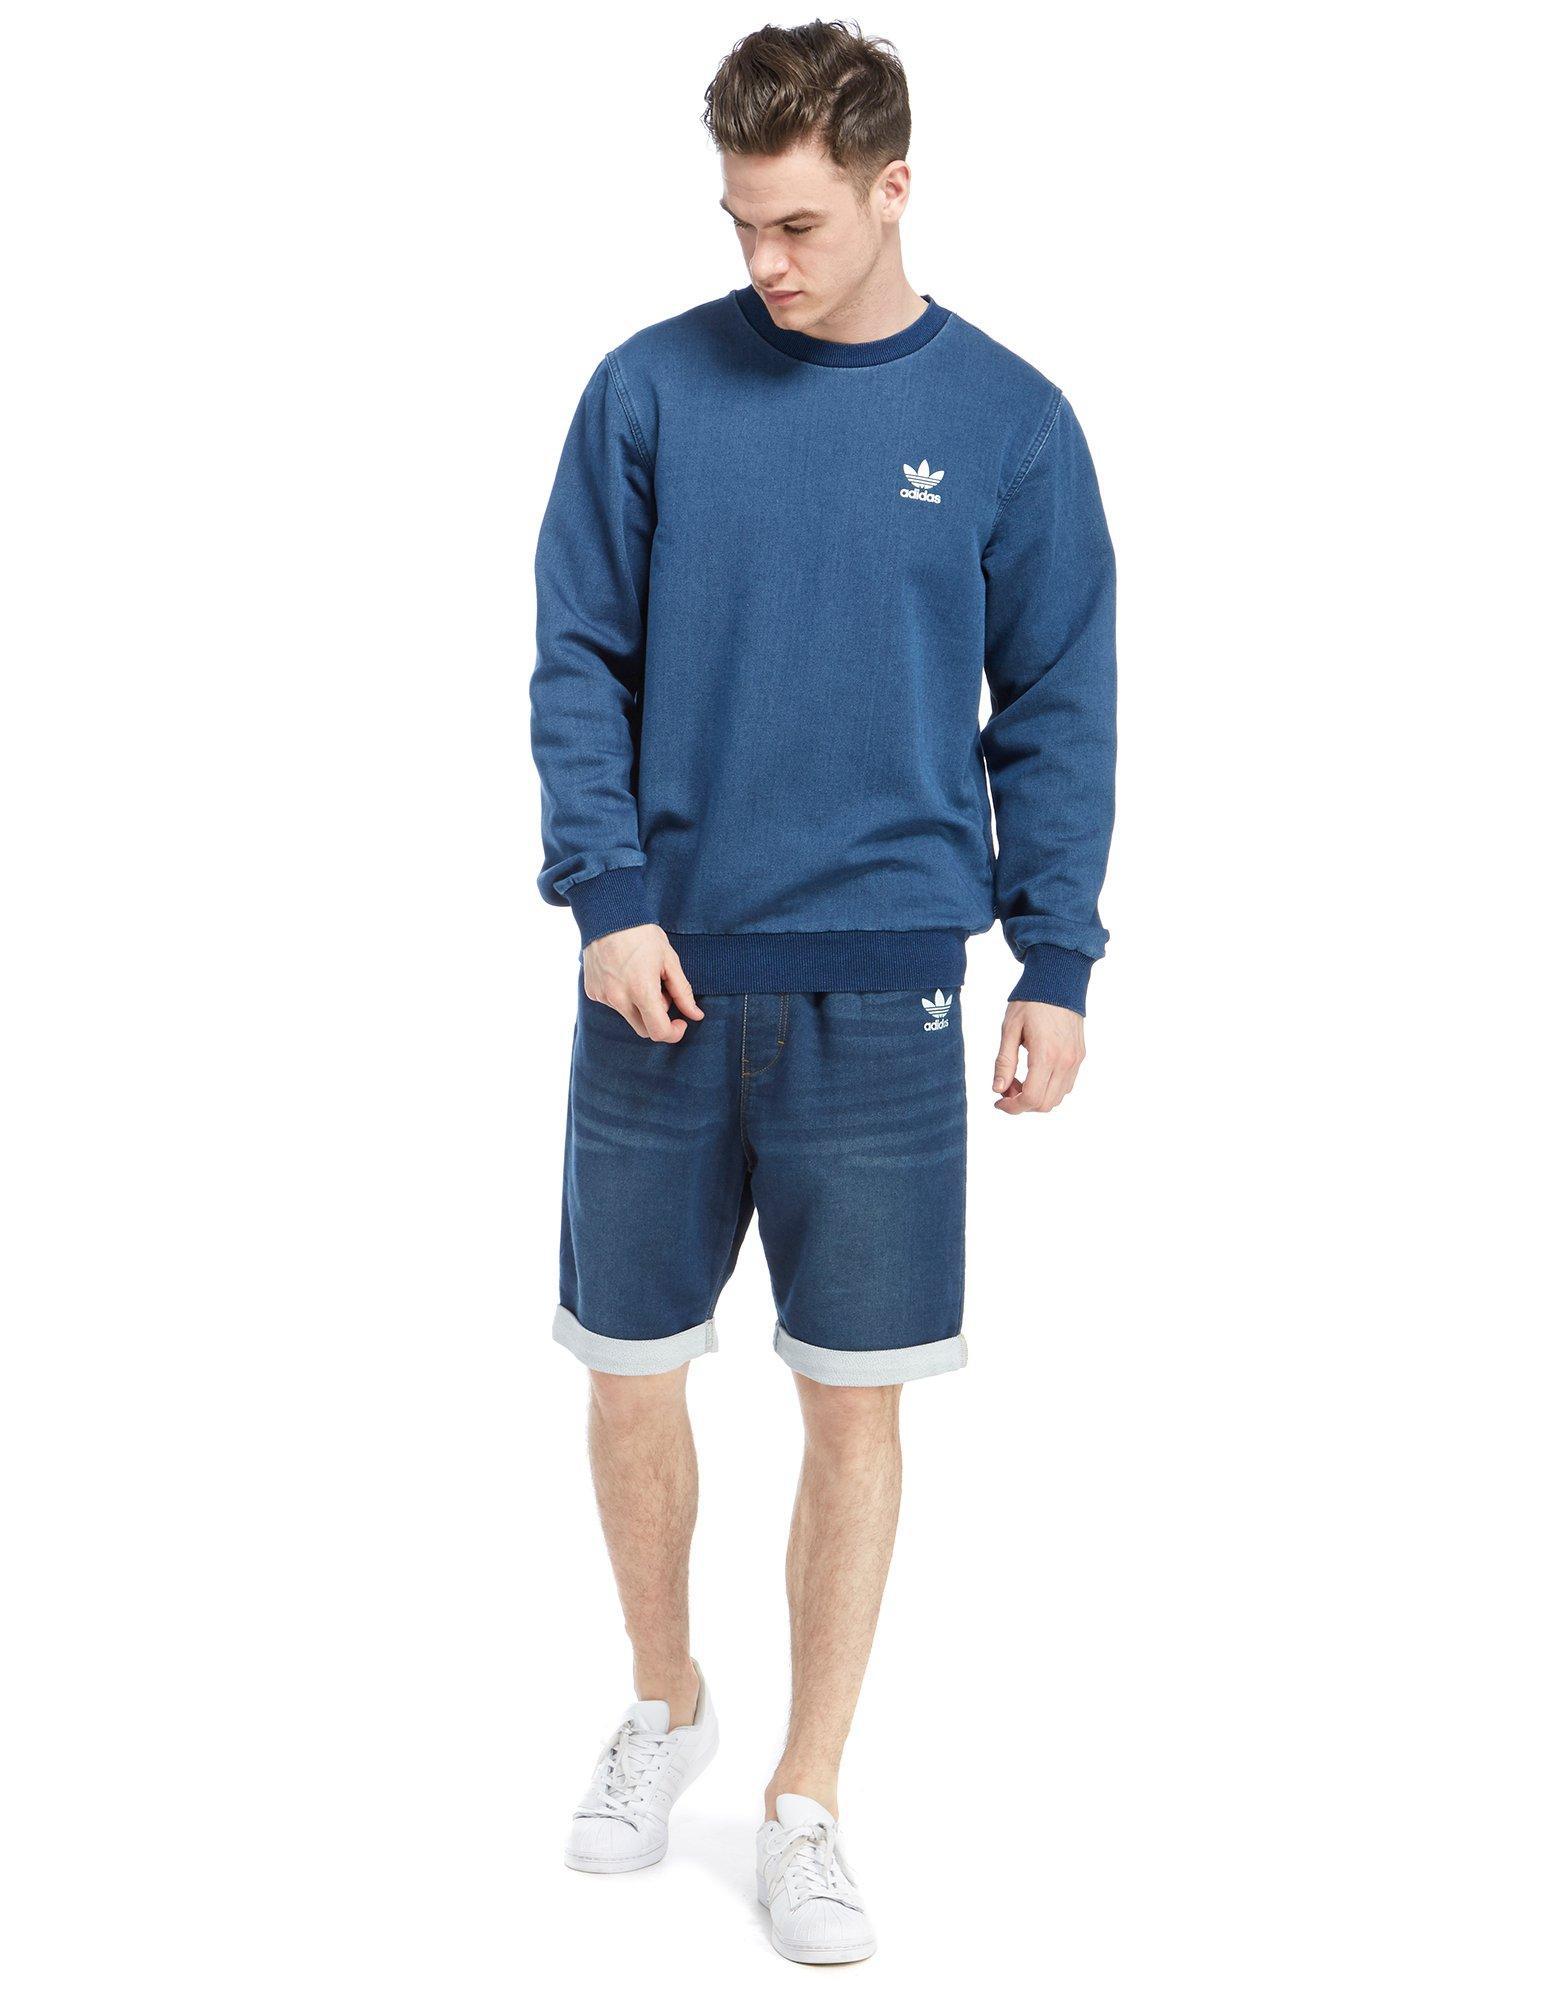 adidas originals trefoil fleece denim shorts